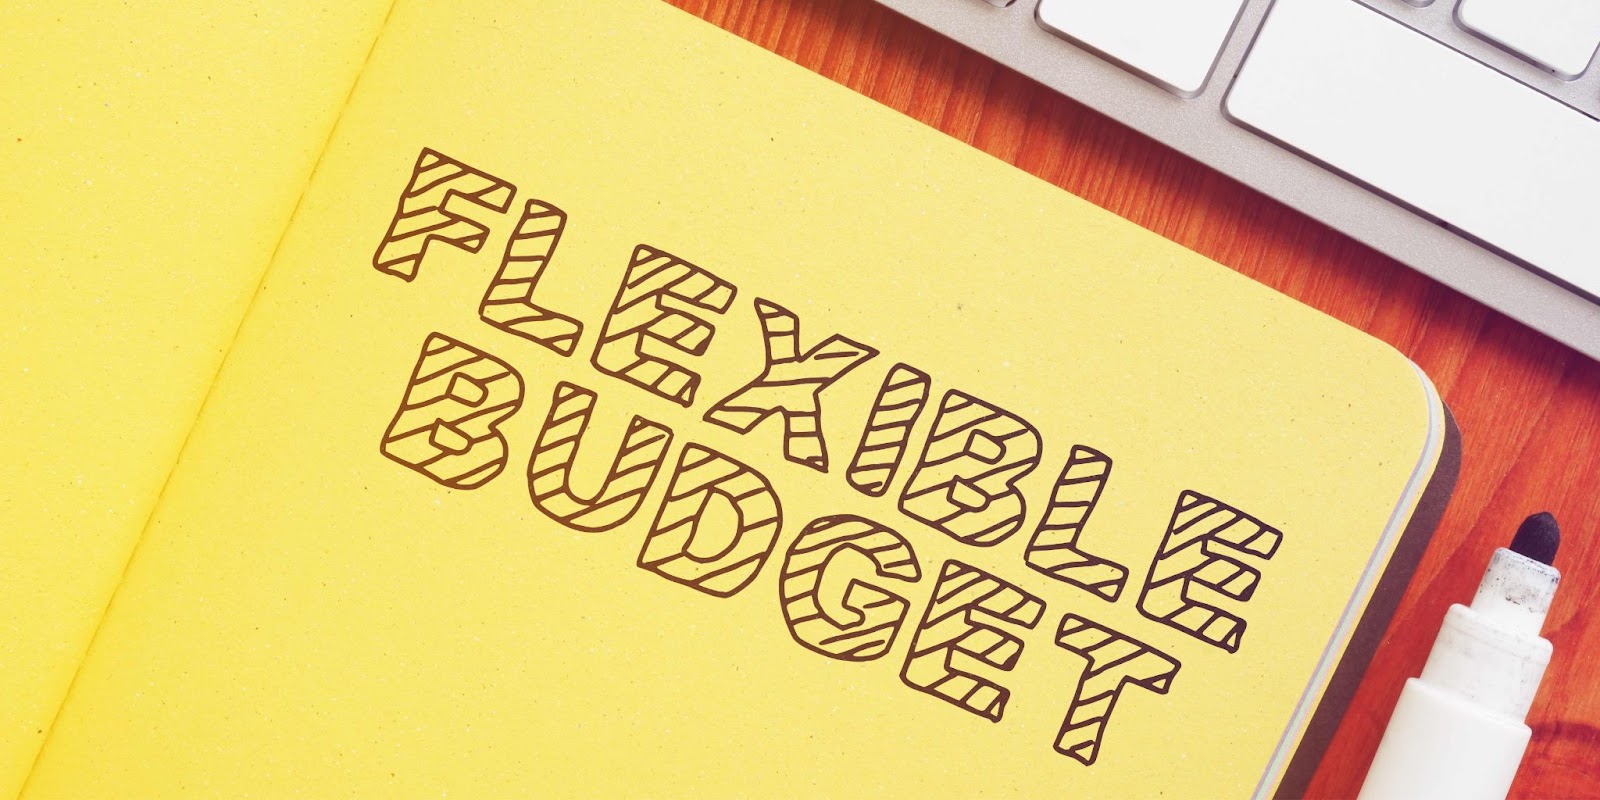 Flexible Budget